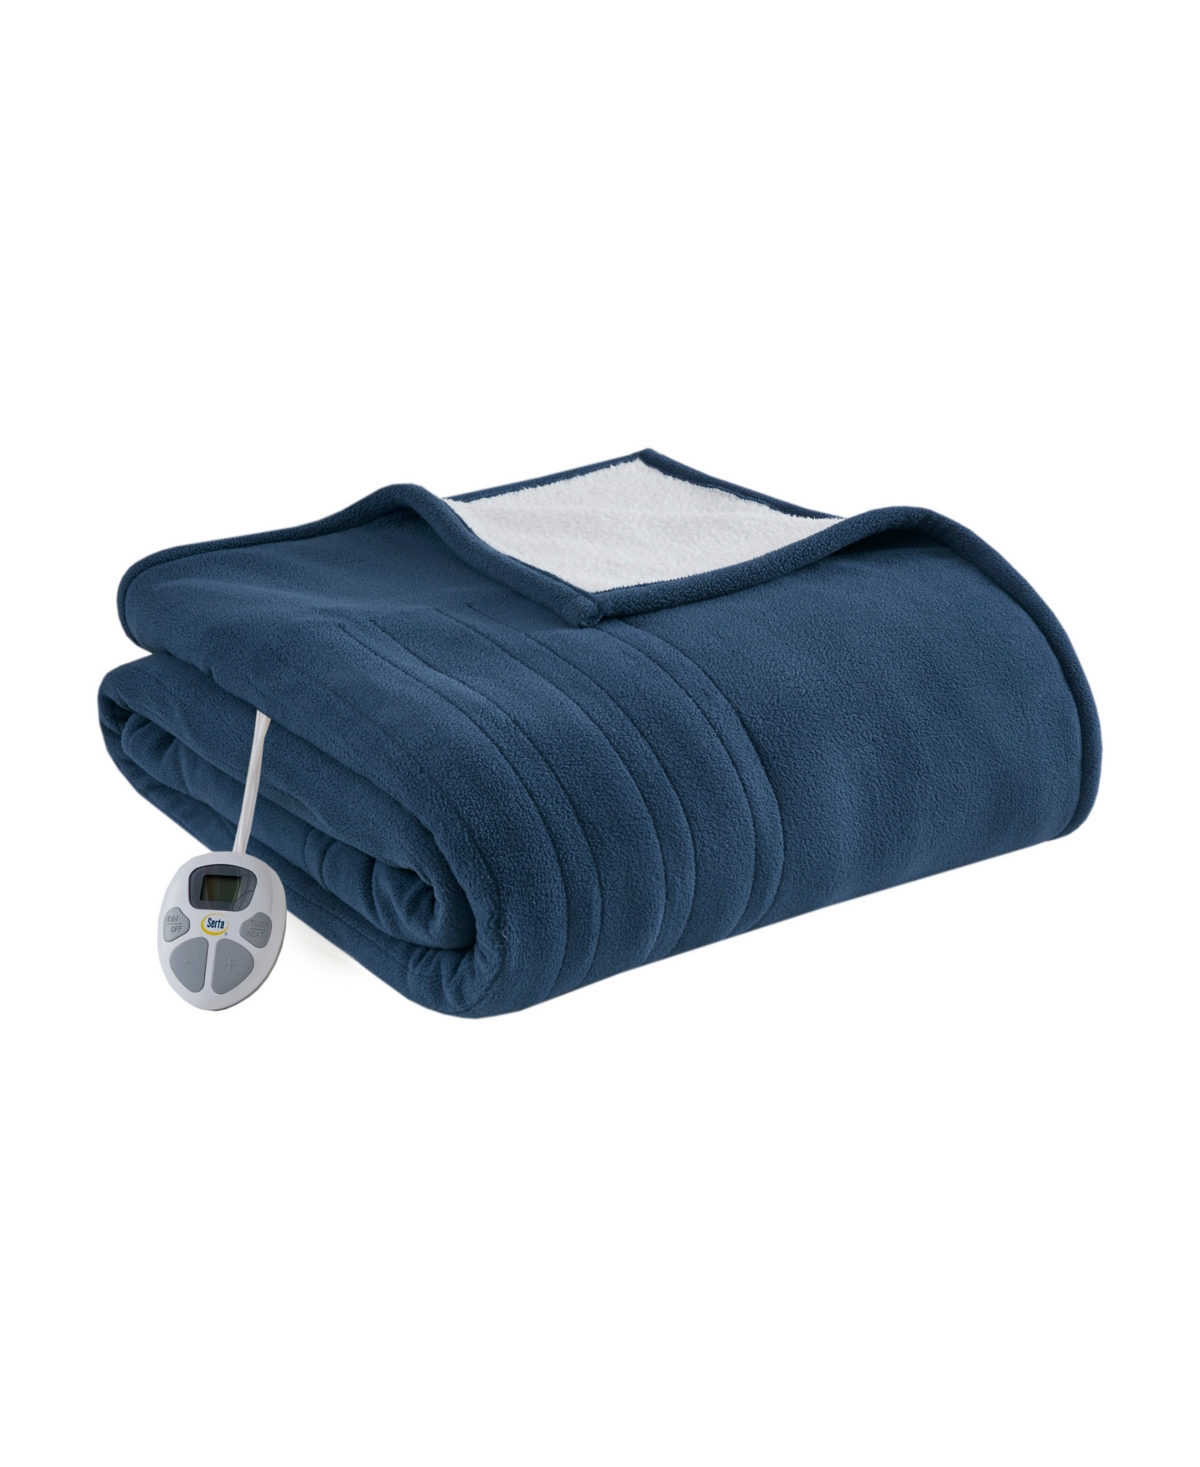 Serta Electric Reversible Fleece To Sherpa Blanket, Full In Blue